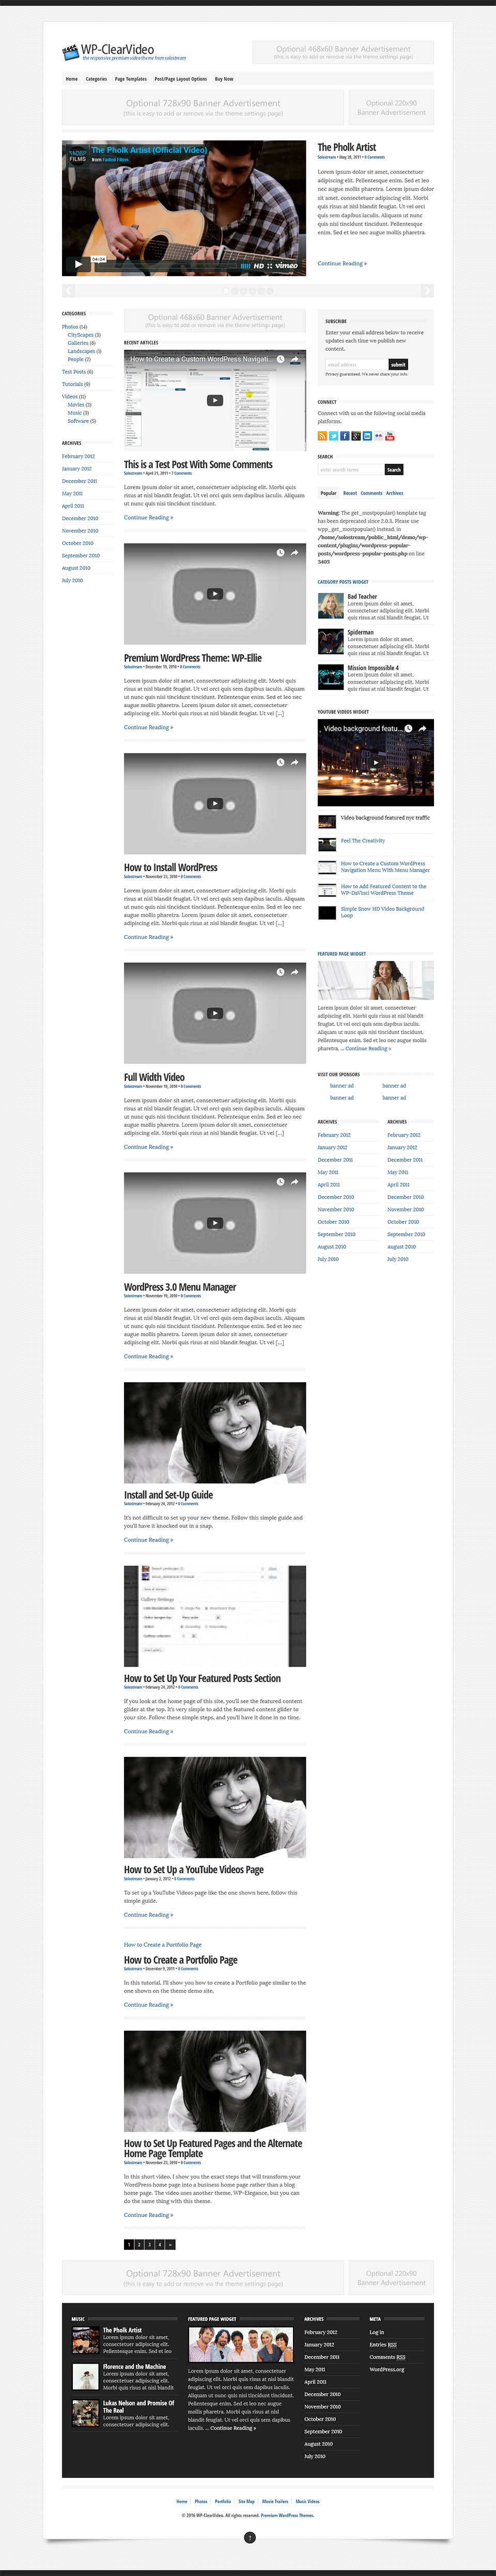 WordPress Archives - Web Teacher